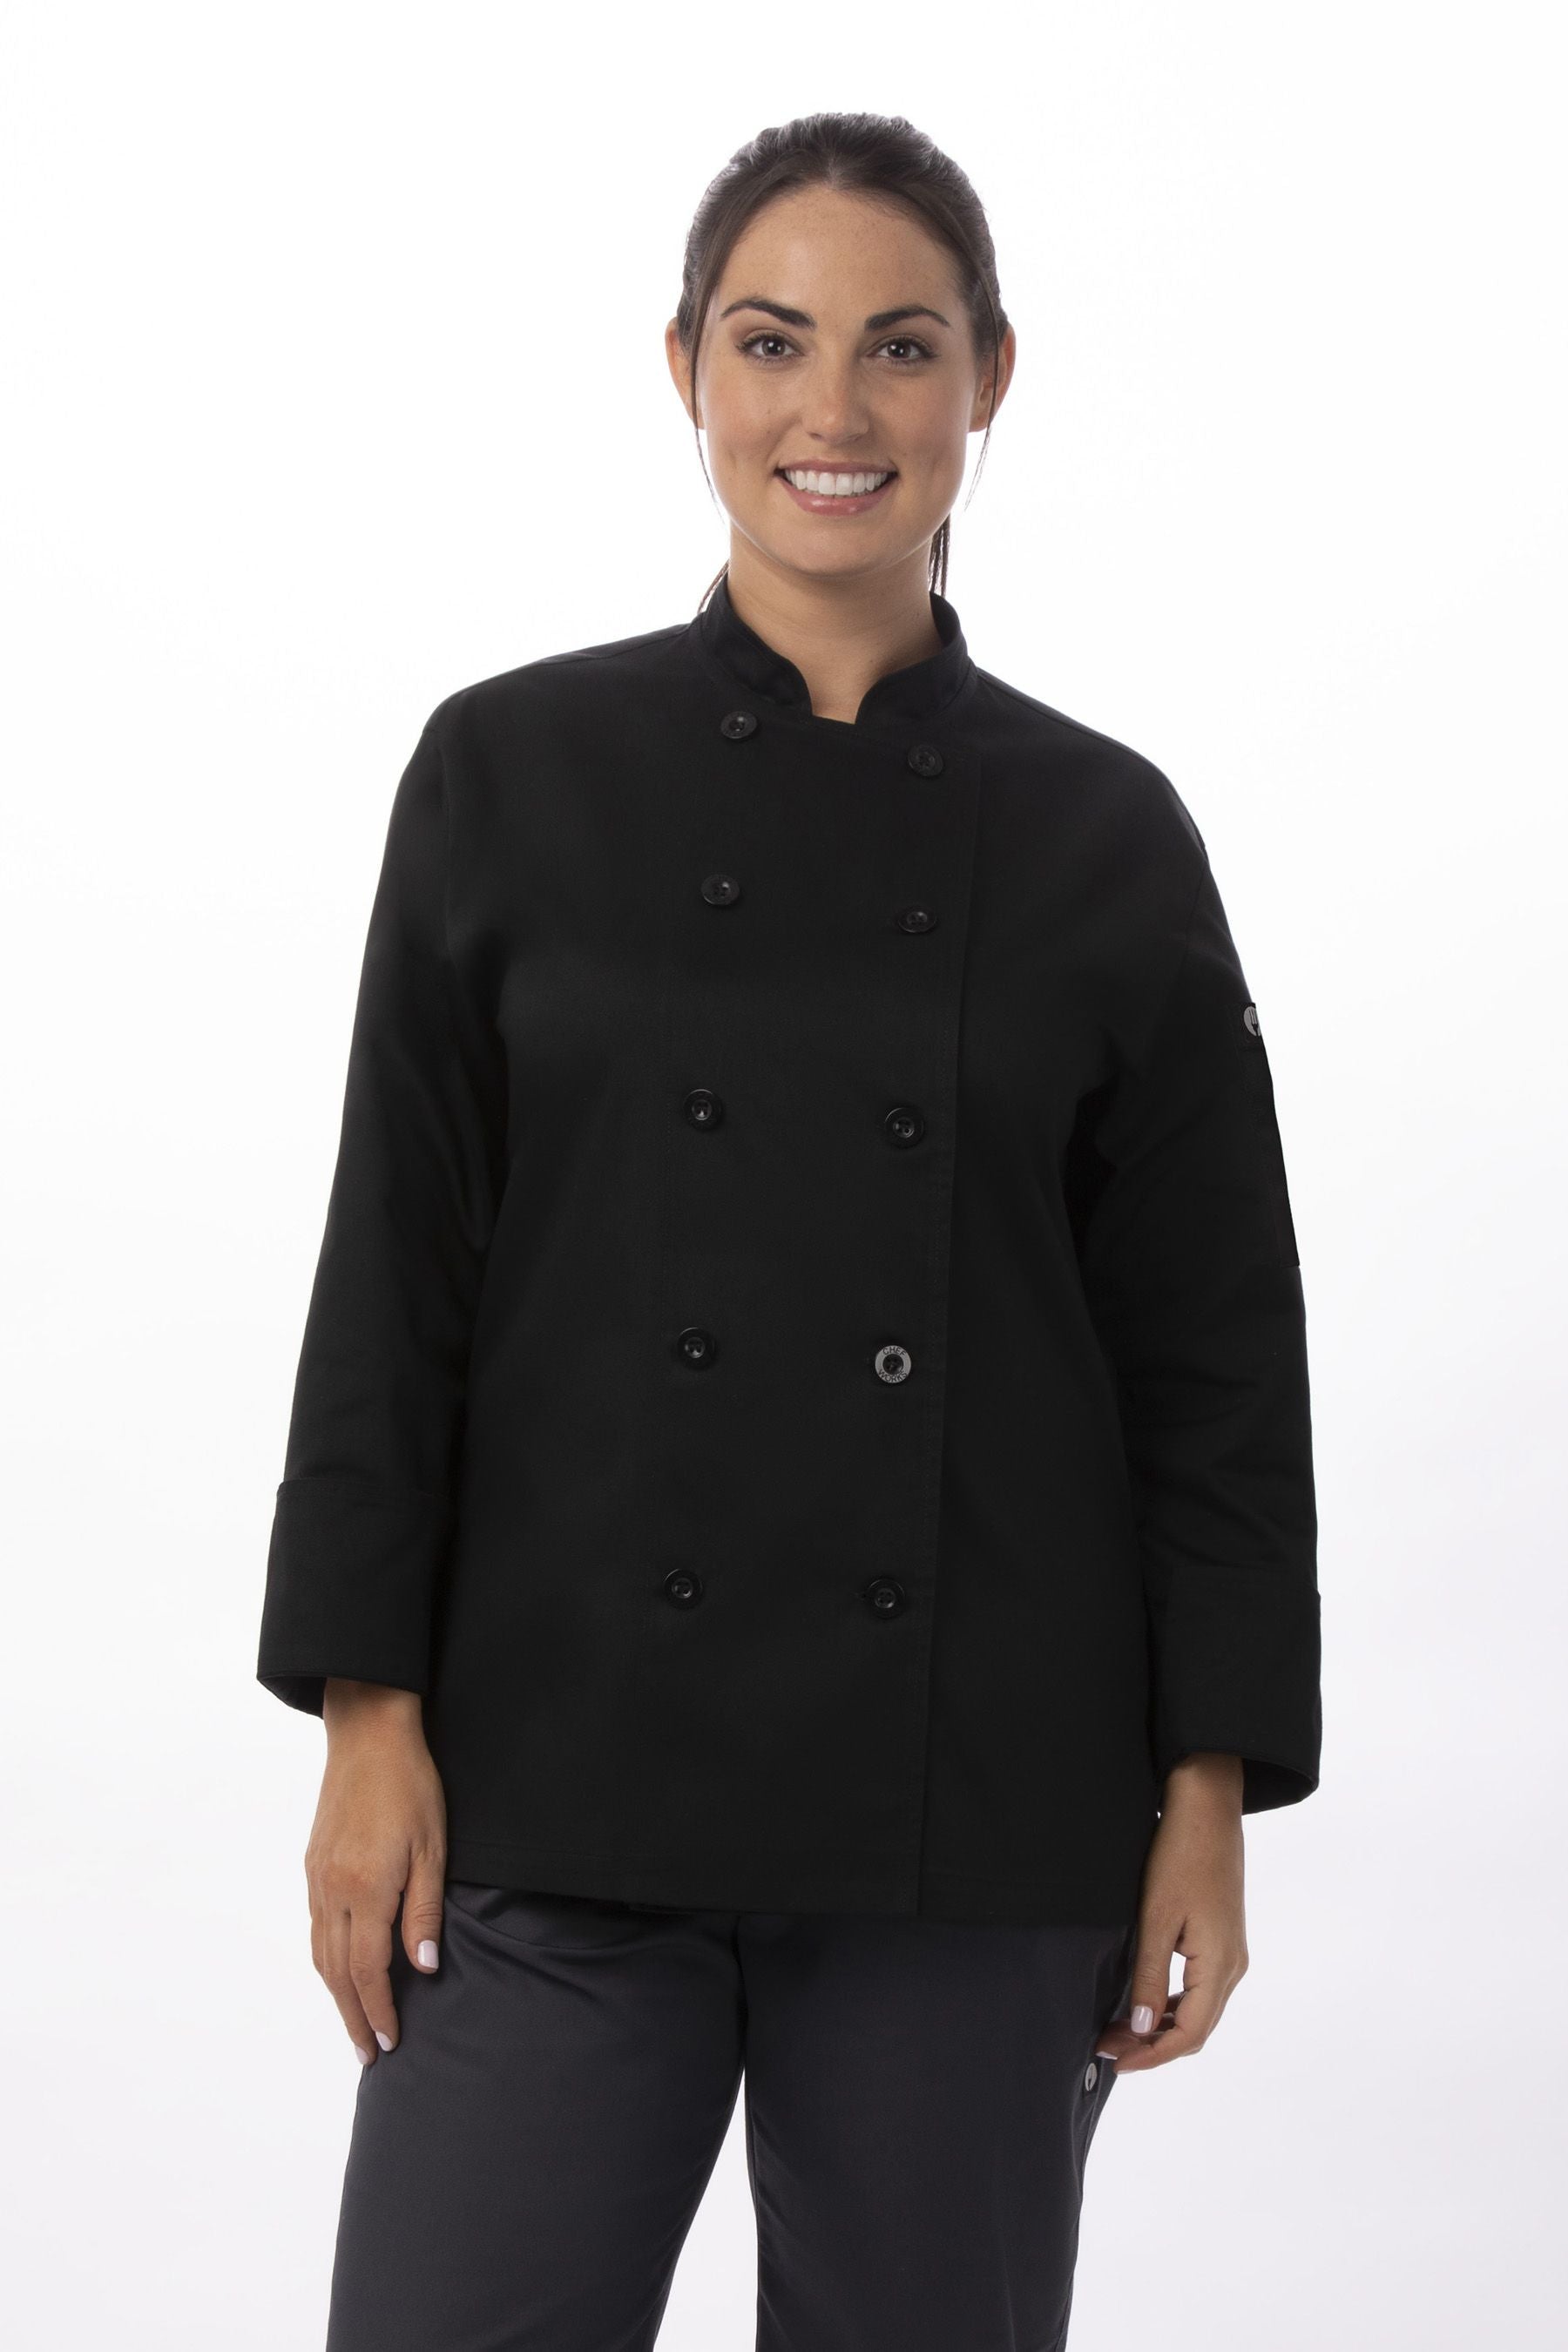 Le Mans Female Chef Coat